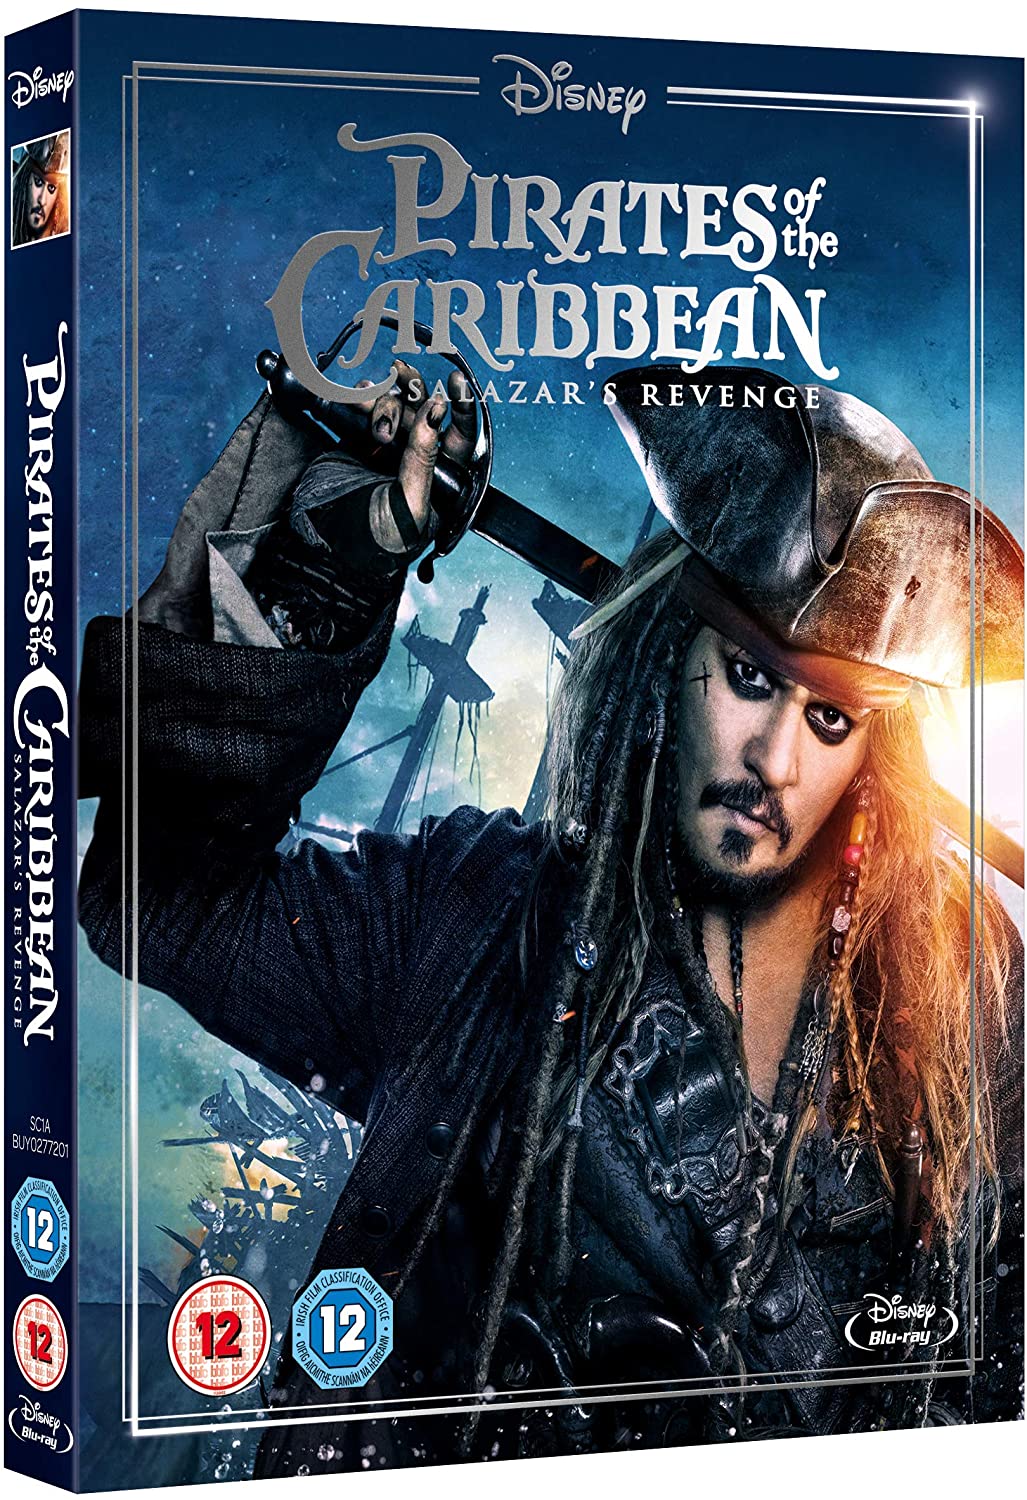 Pirates of the Caribbean: Salazar's Revenge [Blu-ray] [2017]